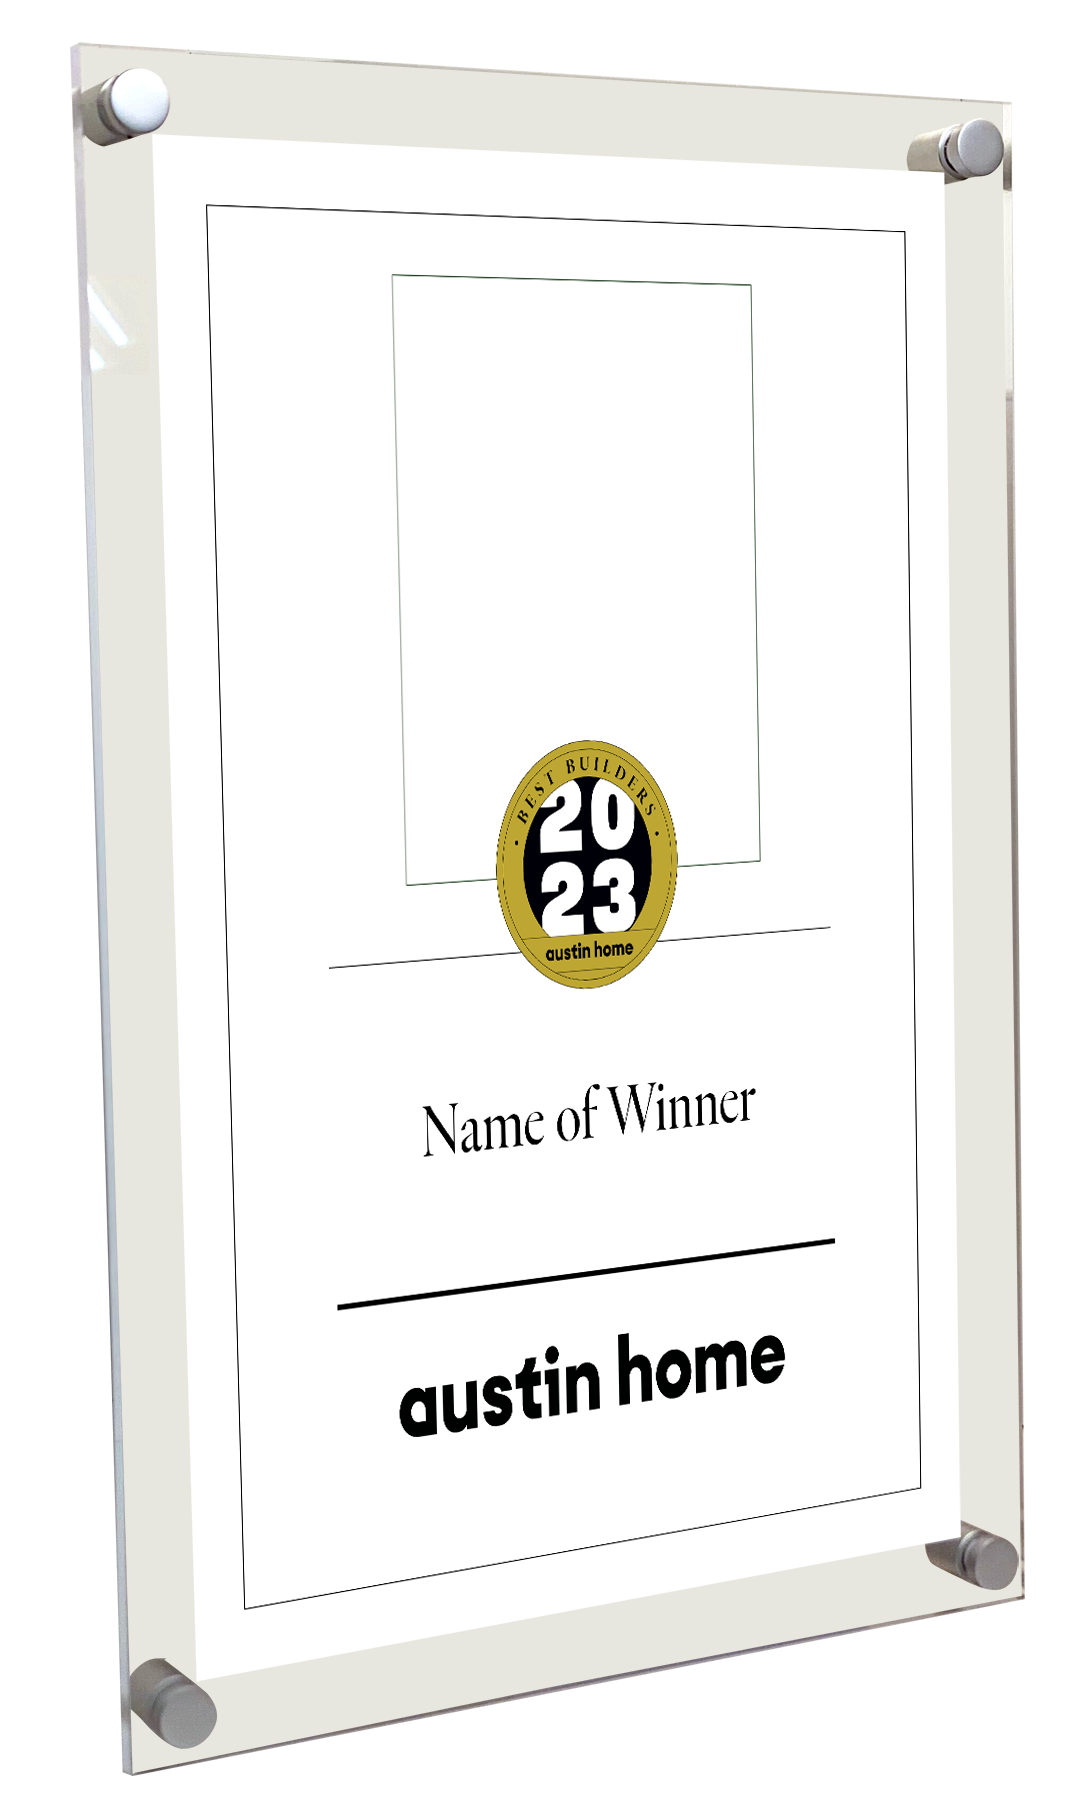 Austin Home "Best Builders Award - Acrylic Standoff Plaque